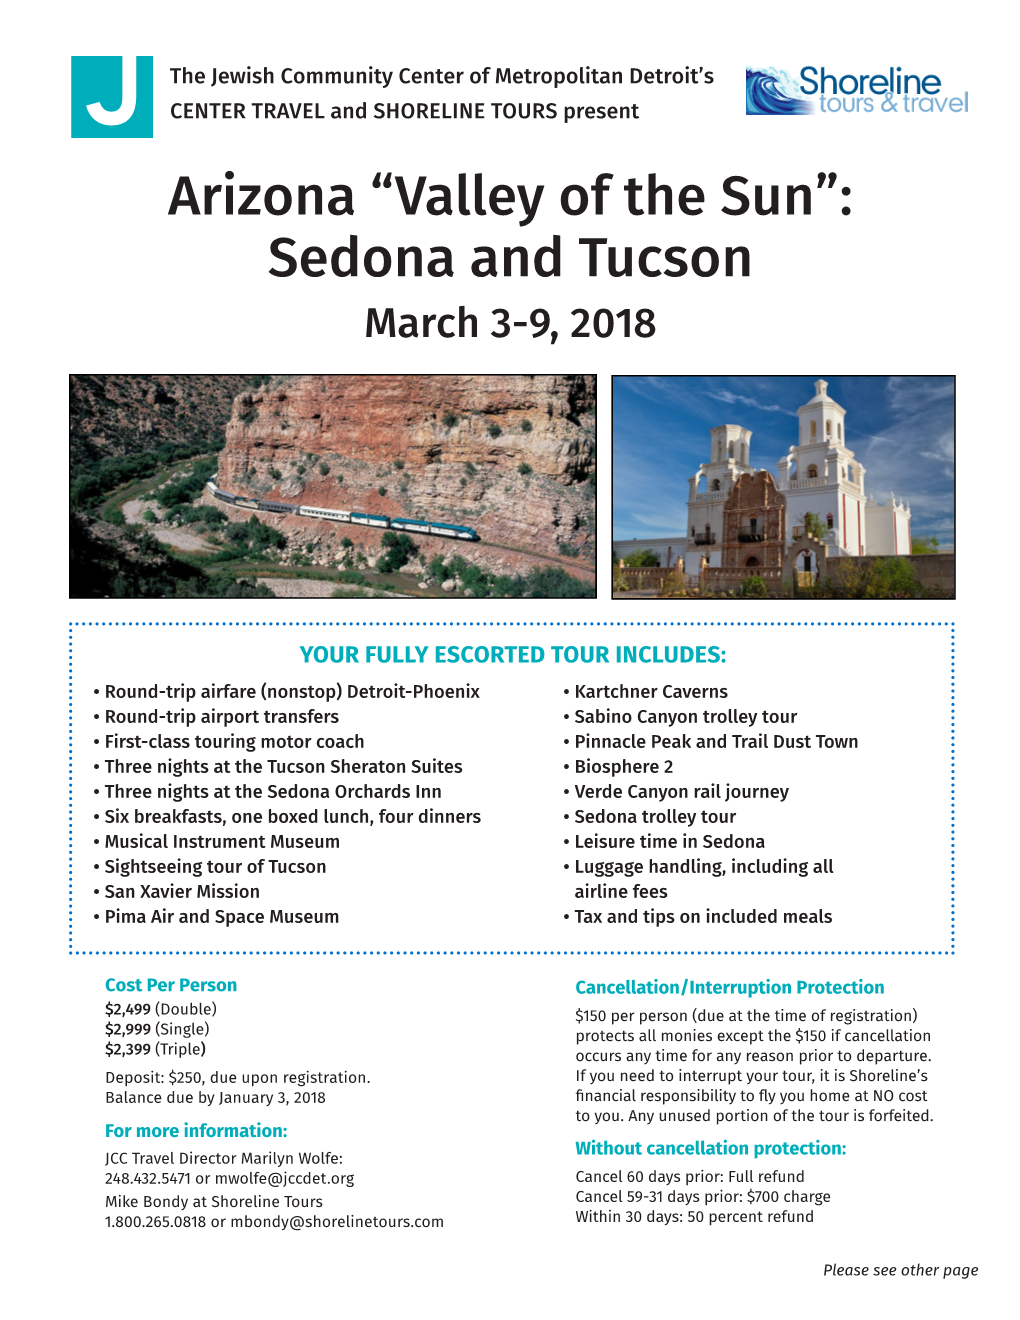 Arizona “Valley of the Sun”: Sedona and Tucson March 3-9, 2018